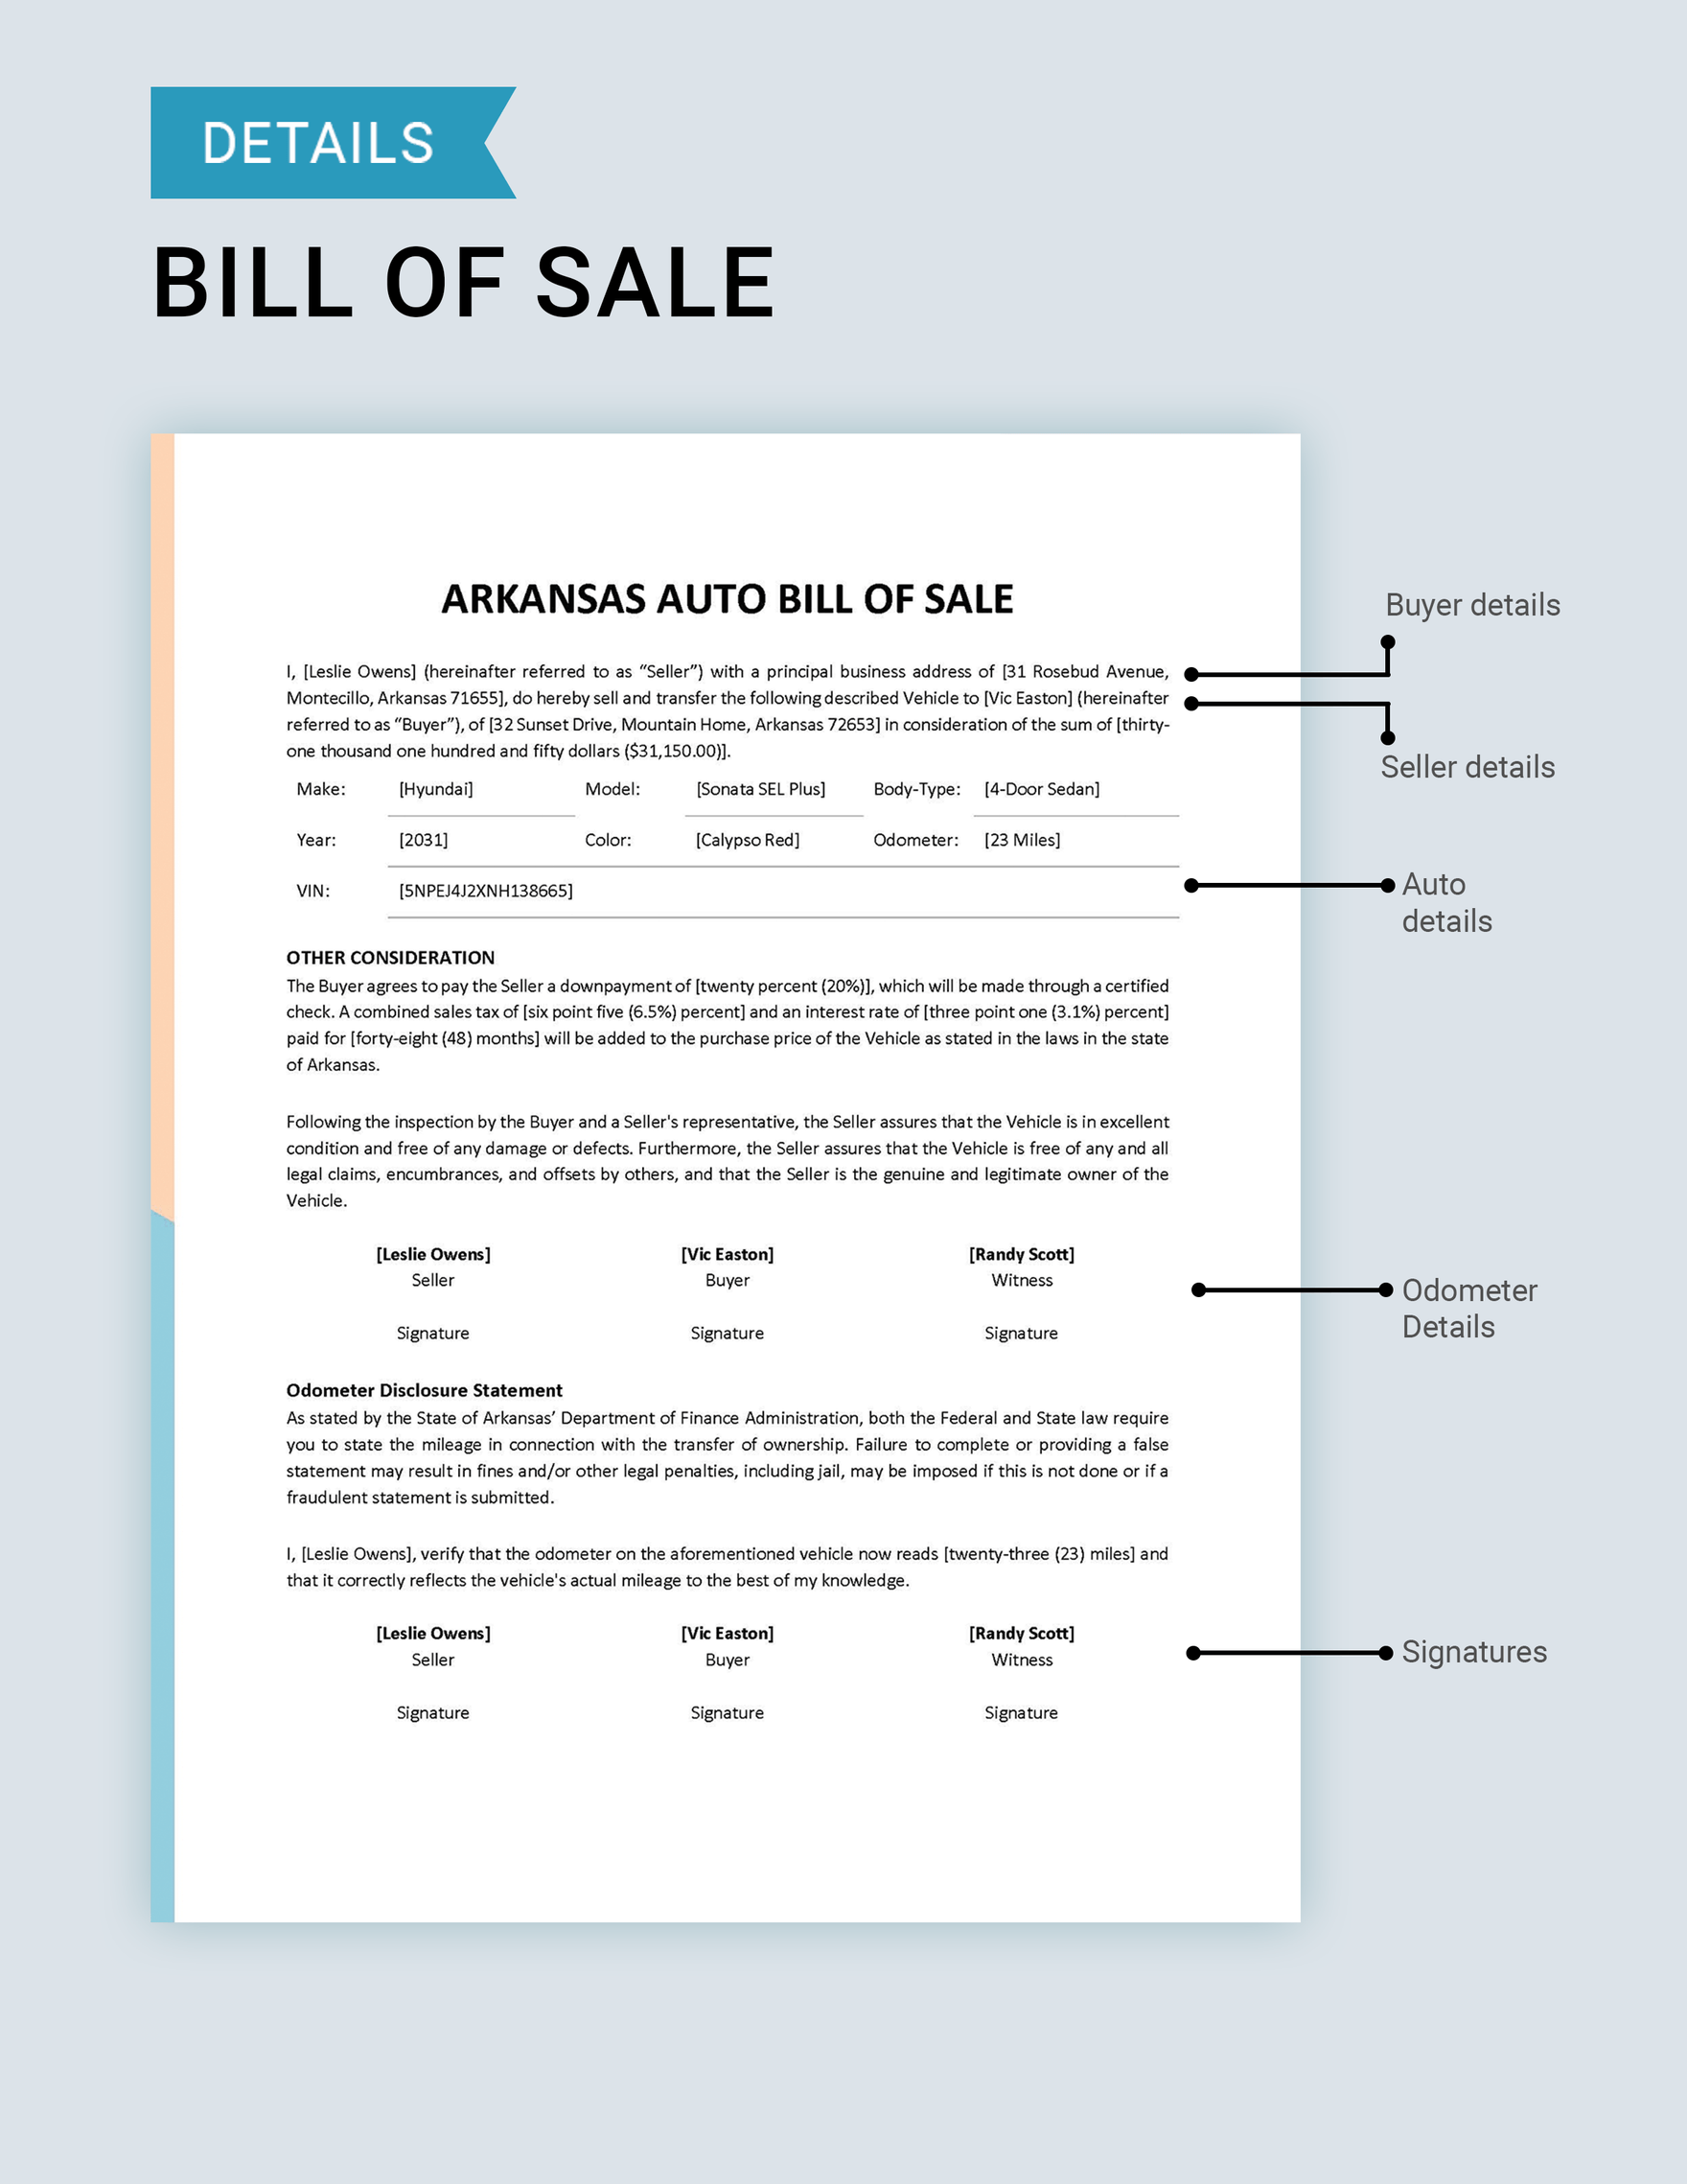 Arkansas Auto Bill of Sale Template Download in Word, Google Docs